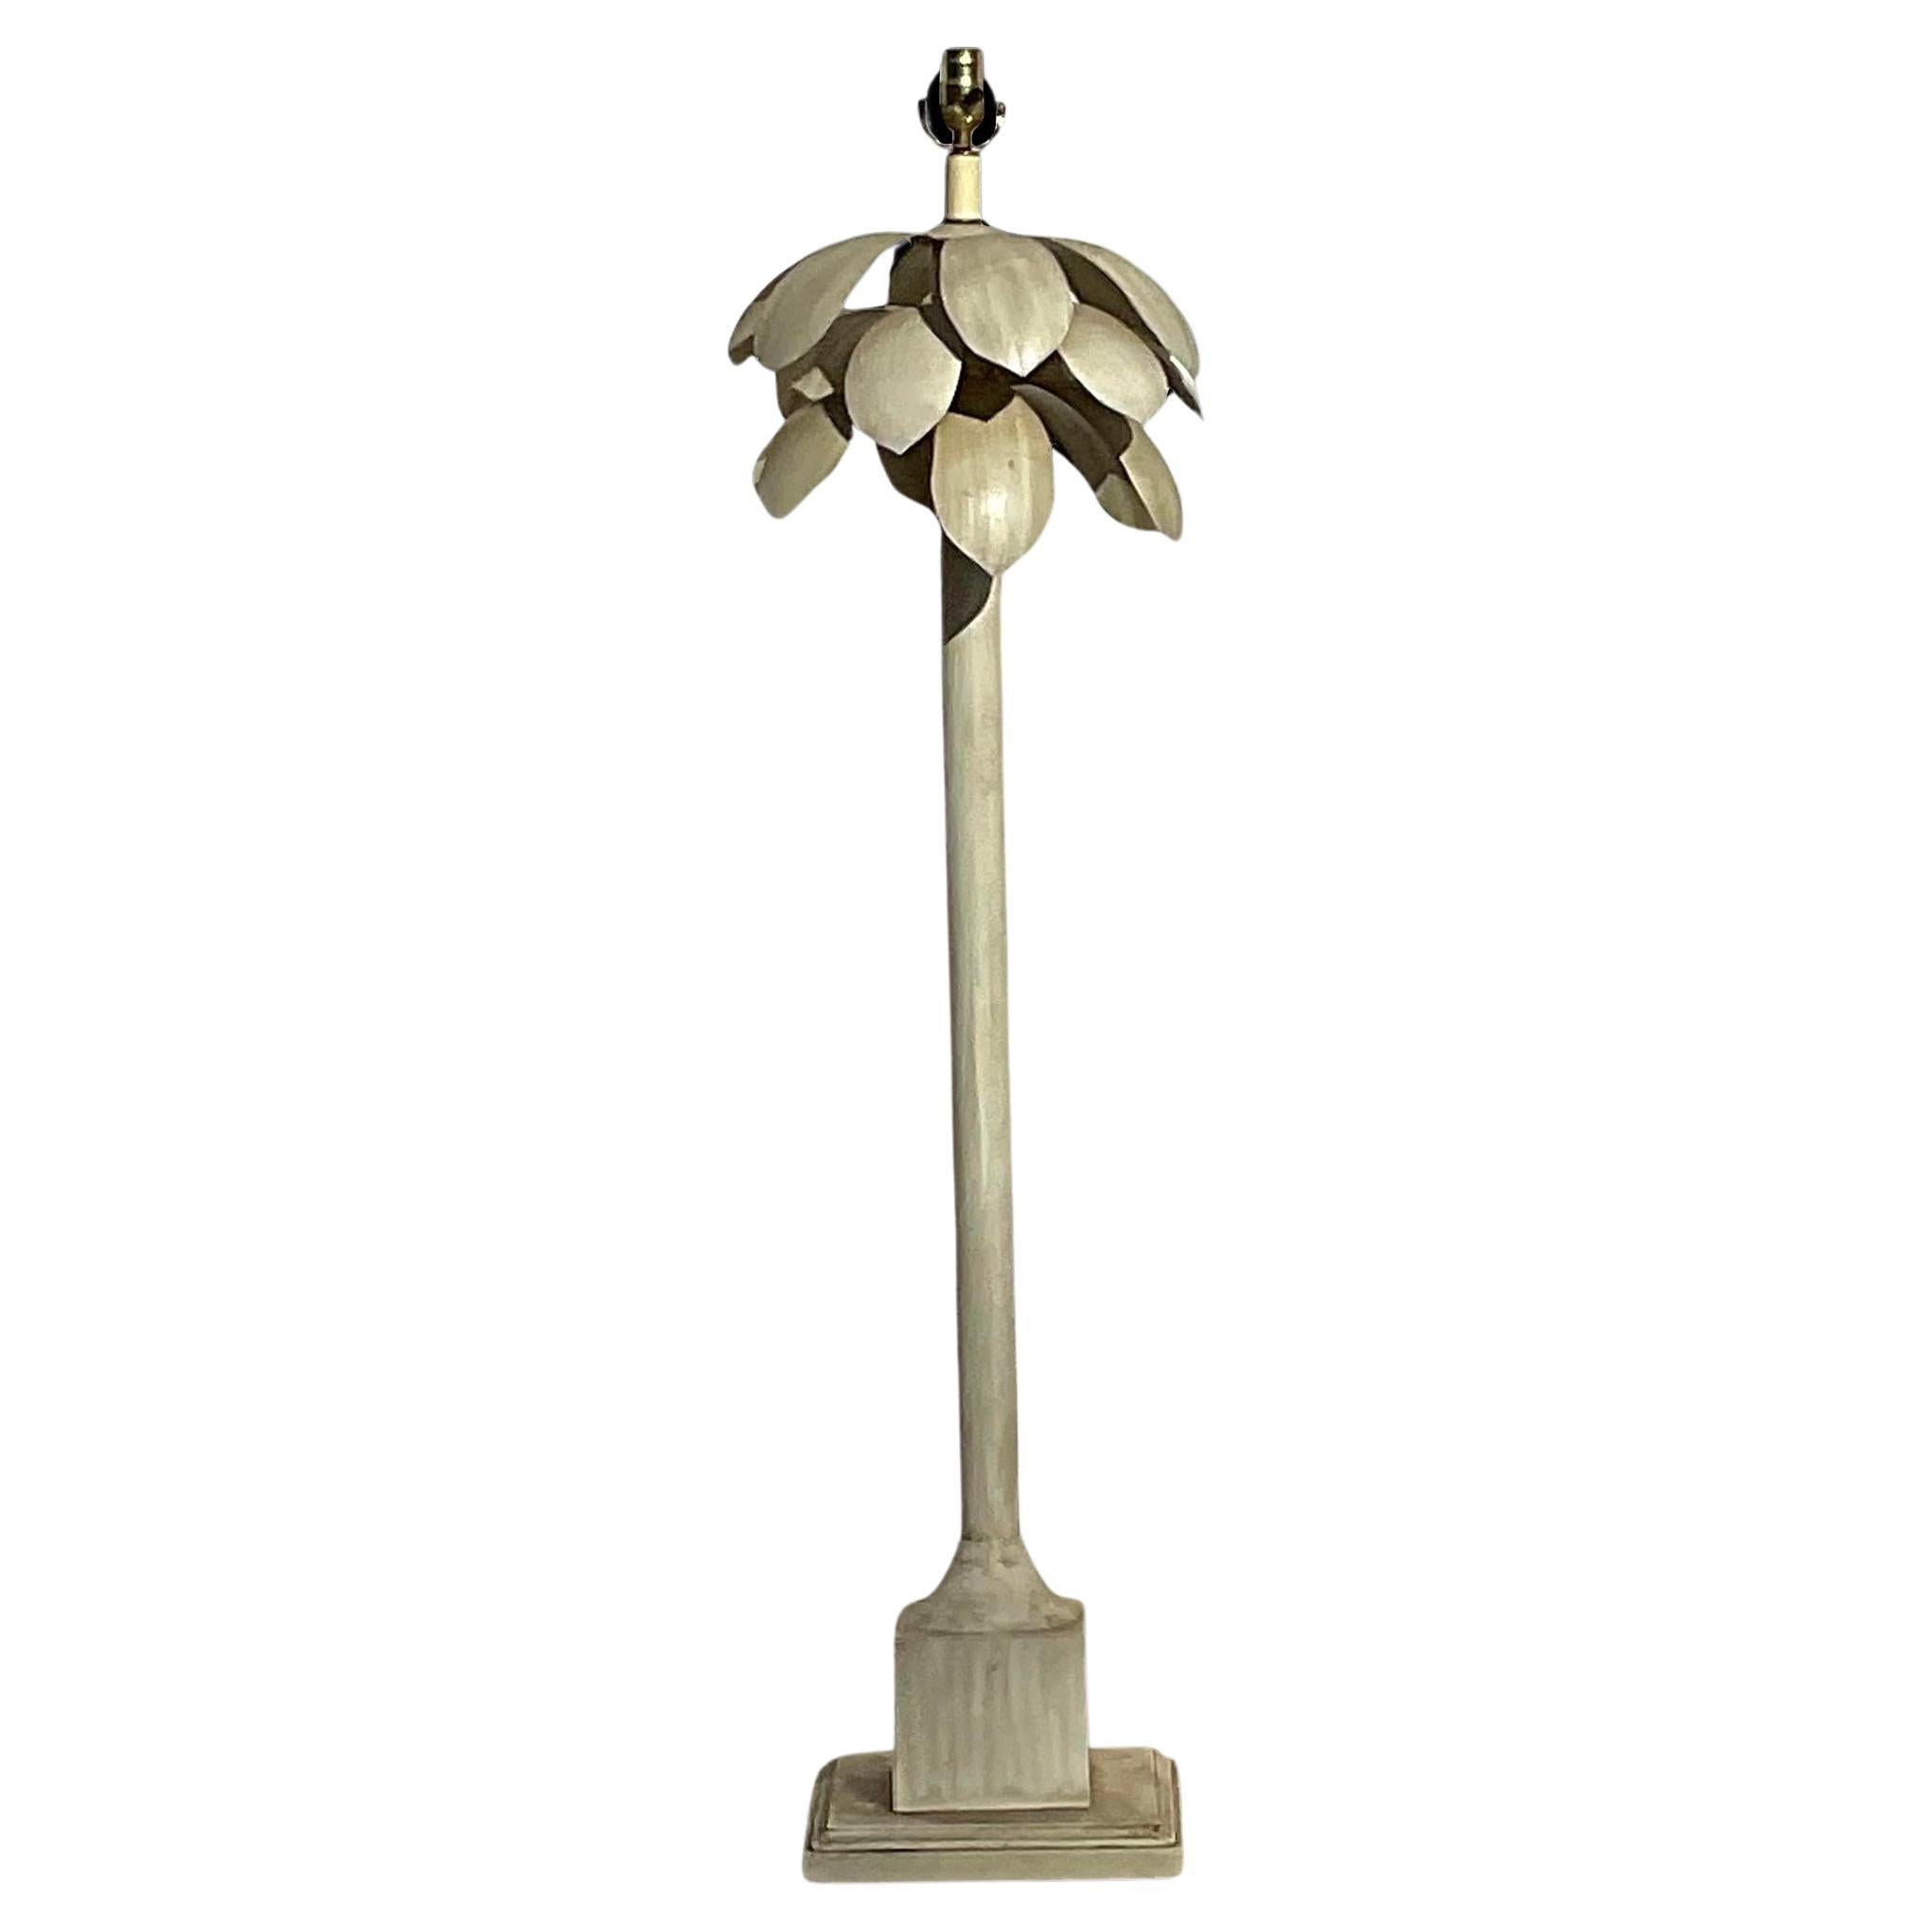  Coastal-Stehlampe aus lackiertem Metall mit Palmenbaumholz, Vintage